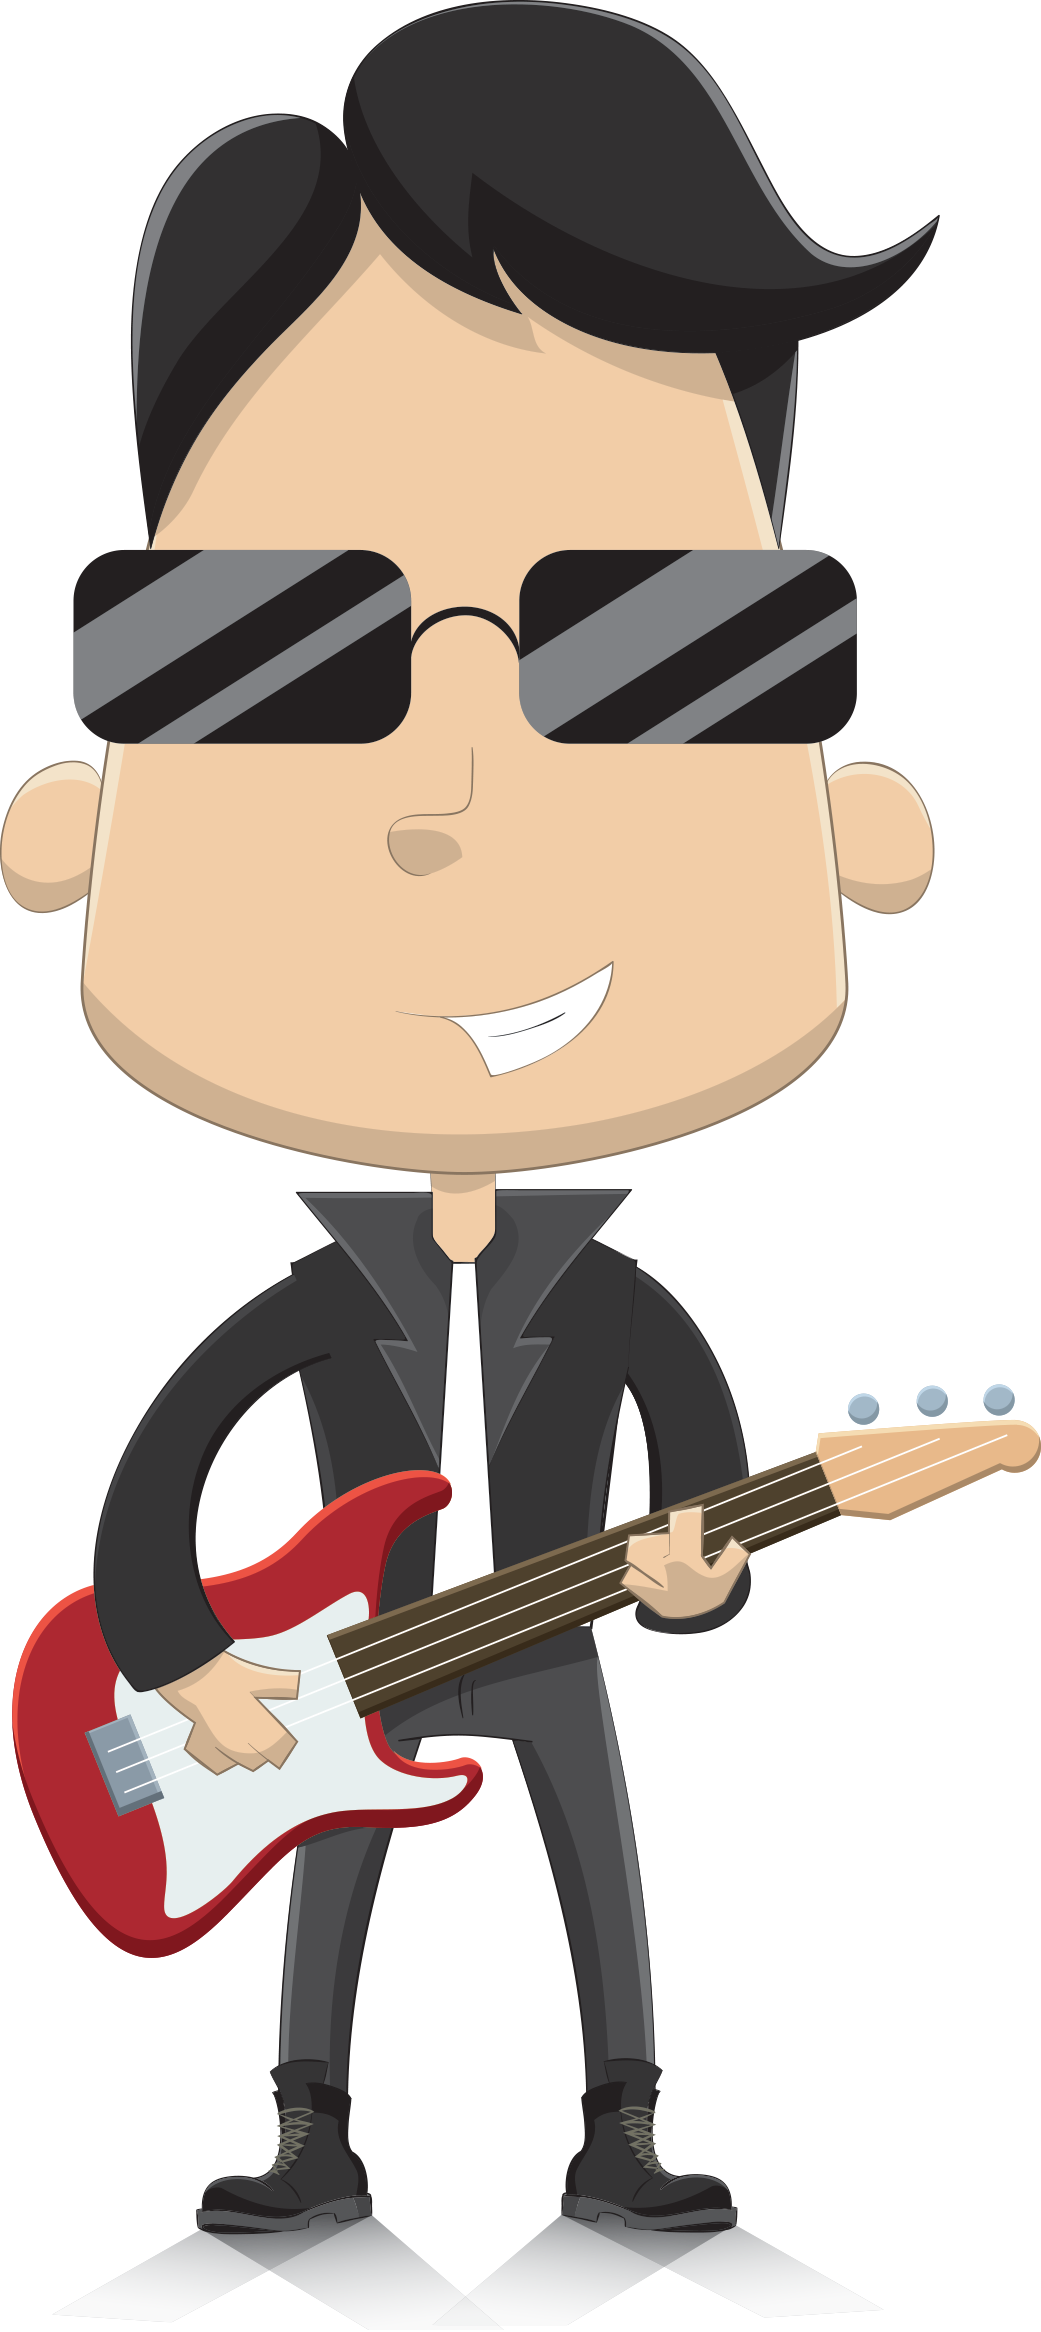 Cartoon Character Holding A Guitar